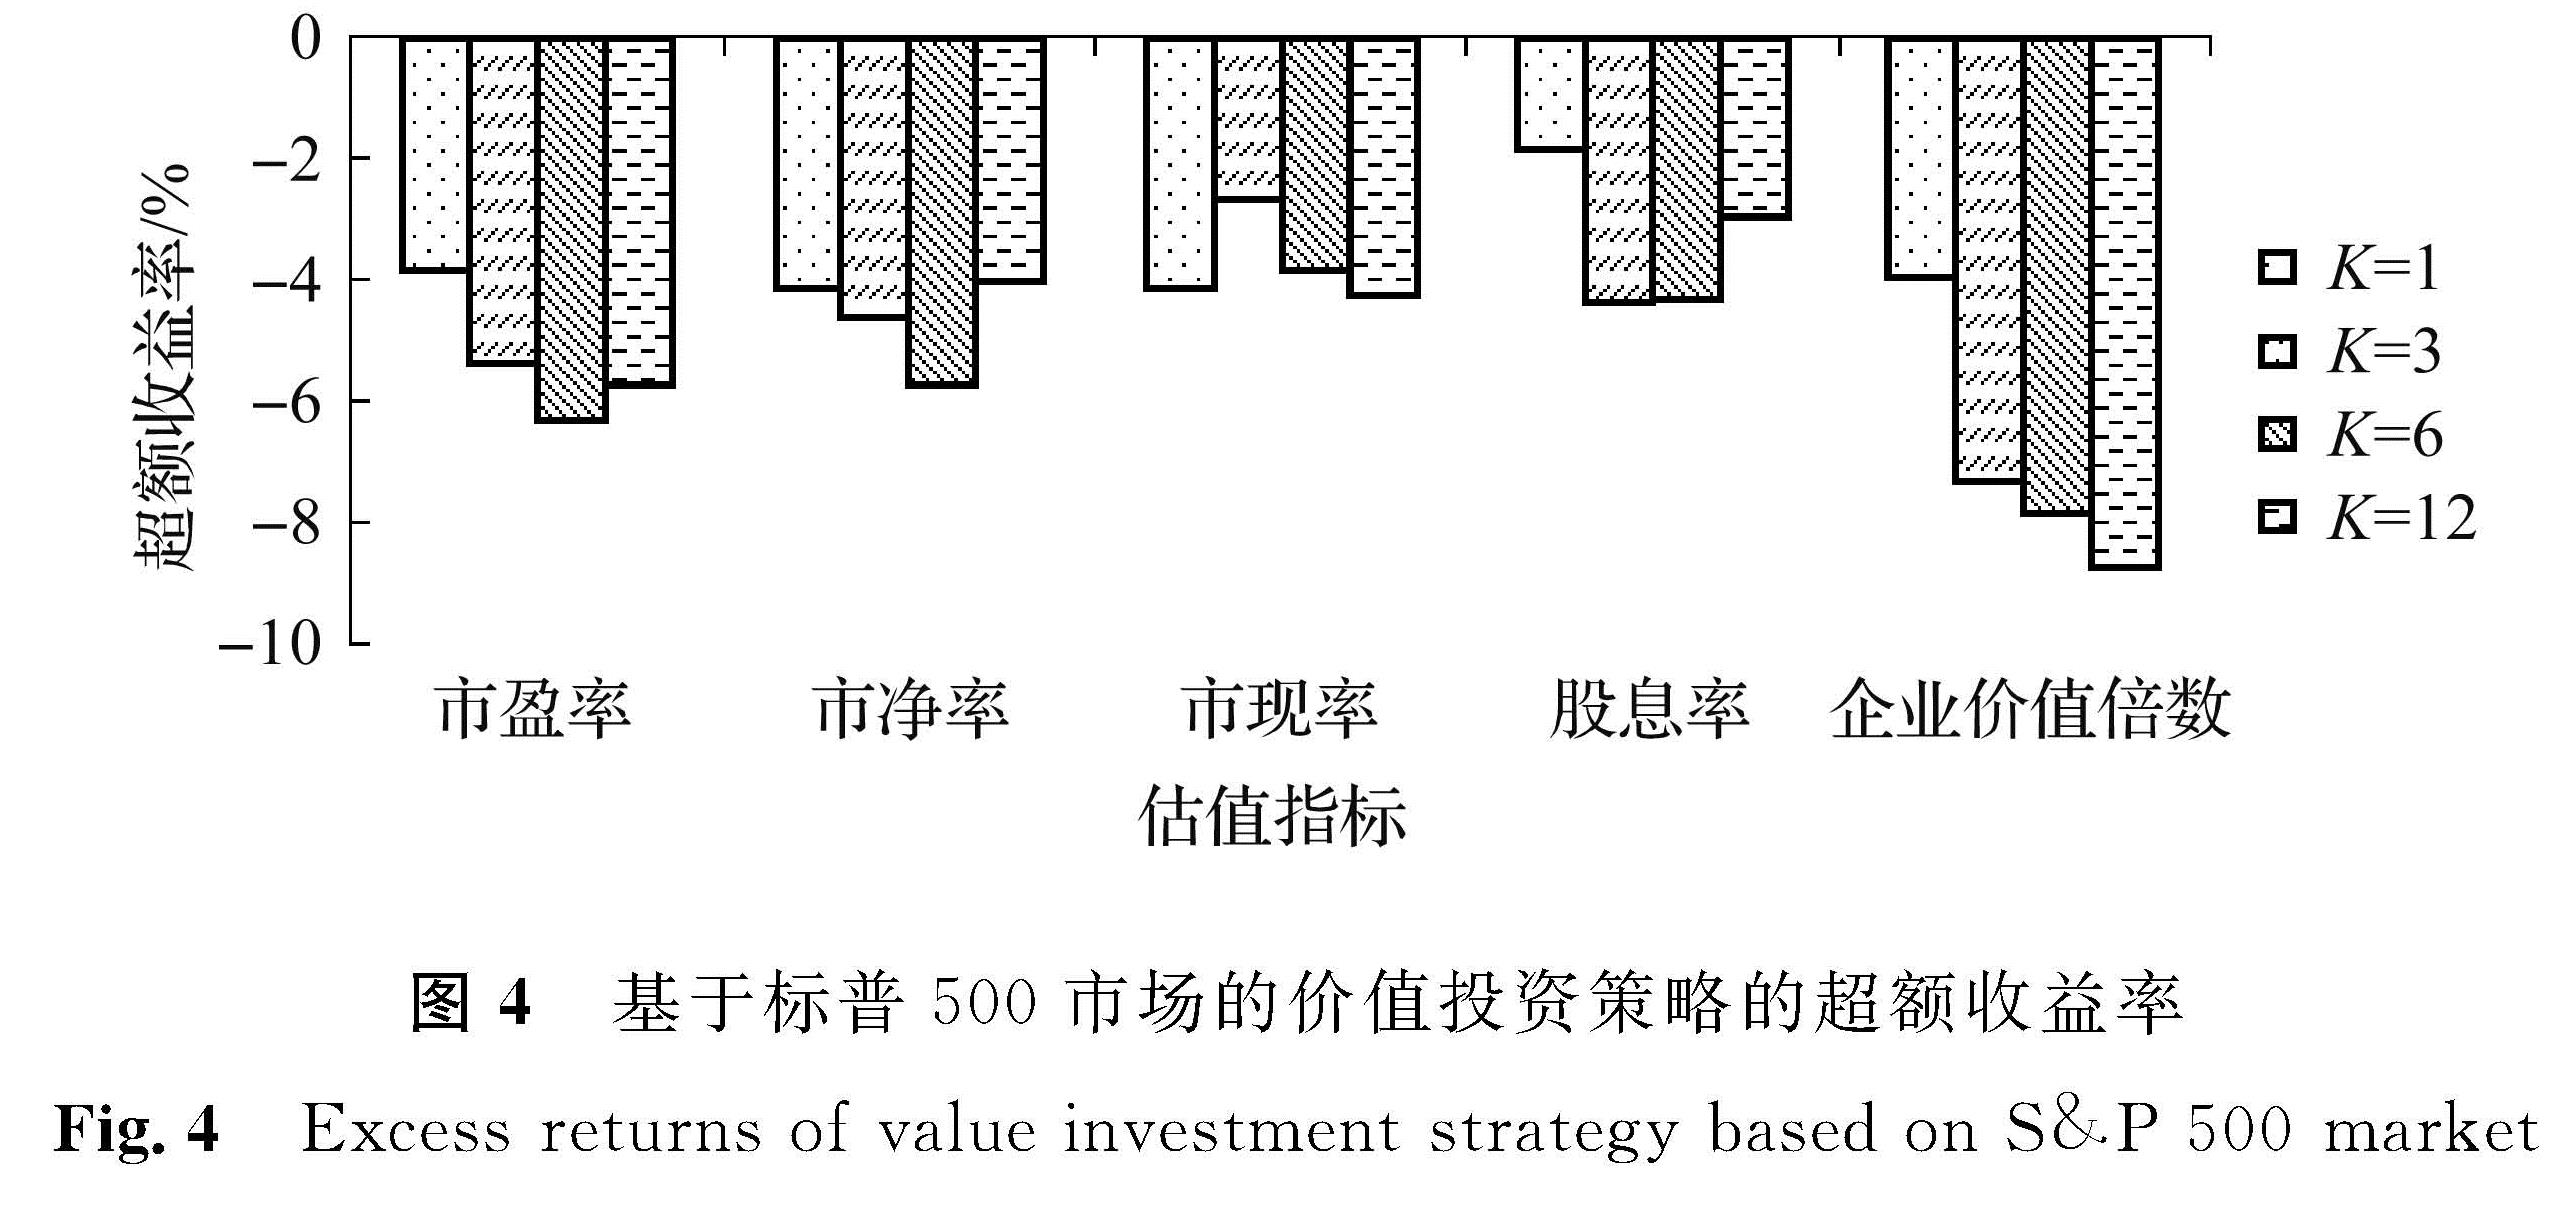 图4 基于标普500市场的价值投资策略的超额收益率<br/>Fig.4 Excess returns of value investment strategy based on S&P 500 market